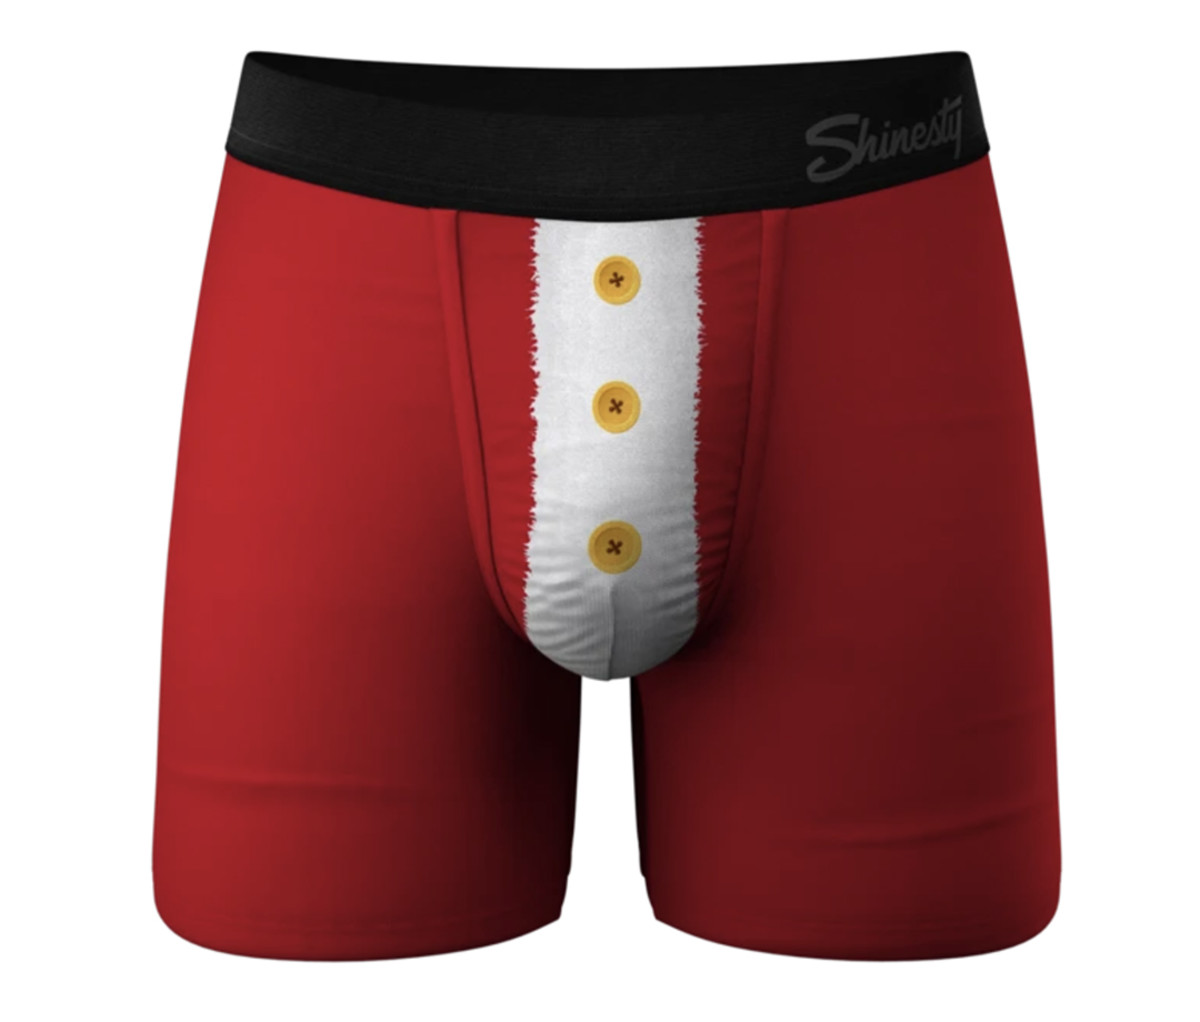 Gift Someone The Comfort of Shinesty Ball Hammock Underwear - Men's Journal